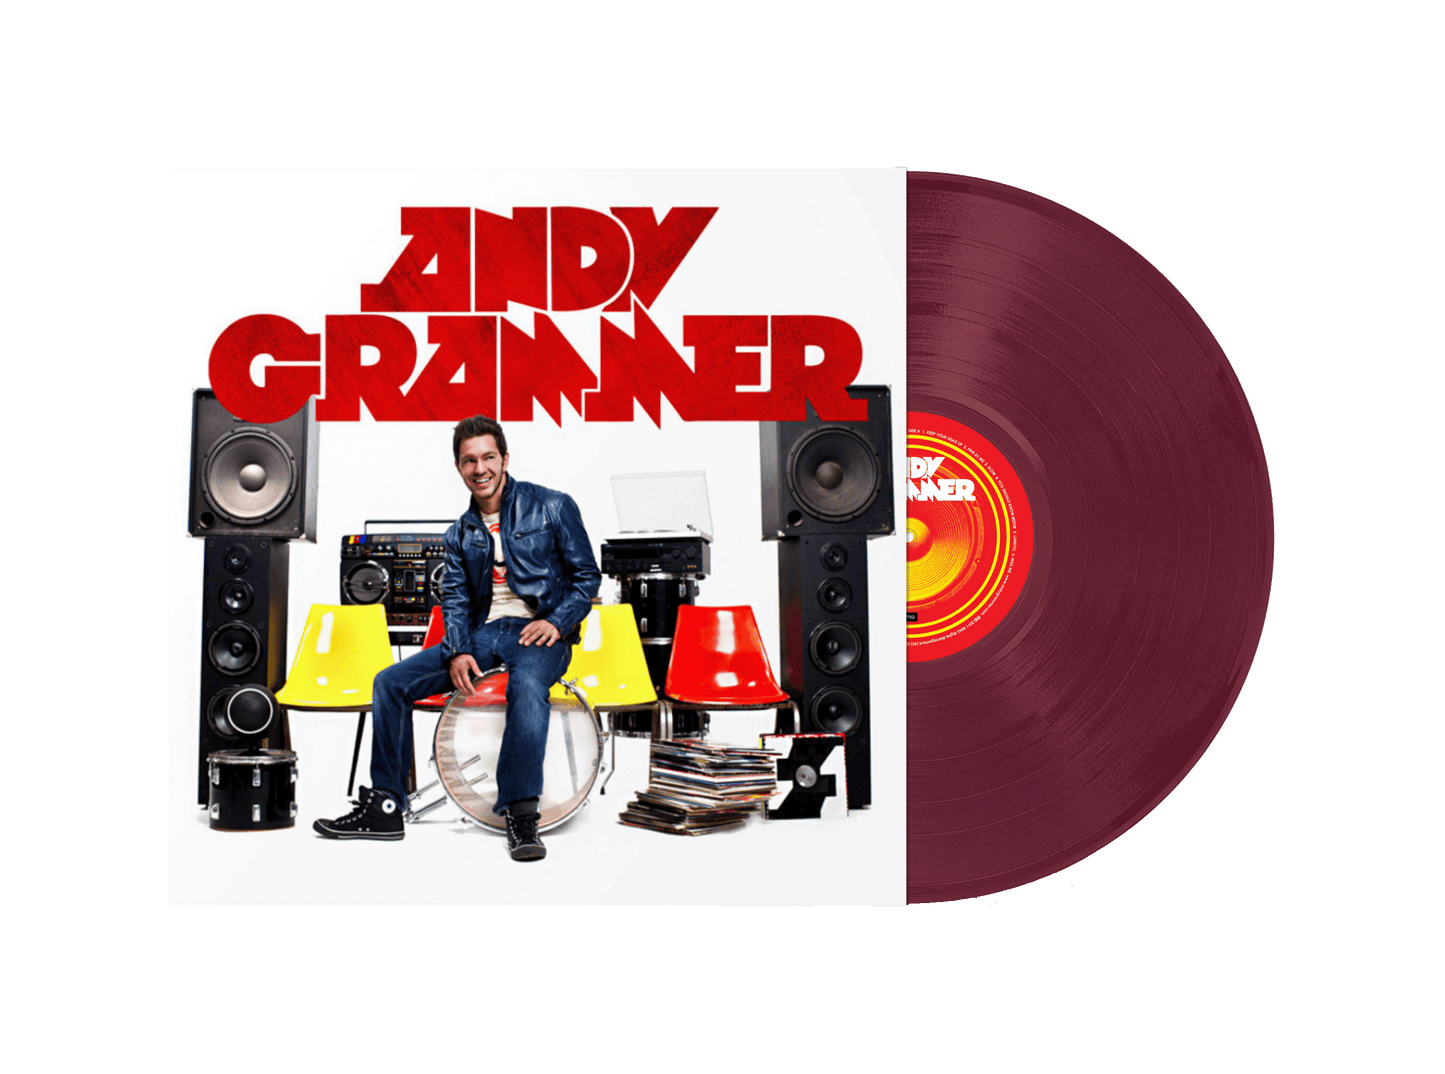 Andy Grammer – LP  (Fruit Punch Color)